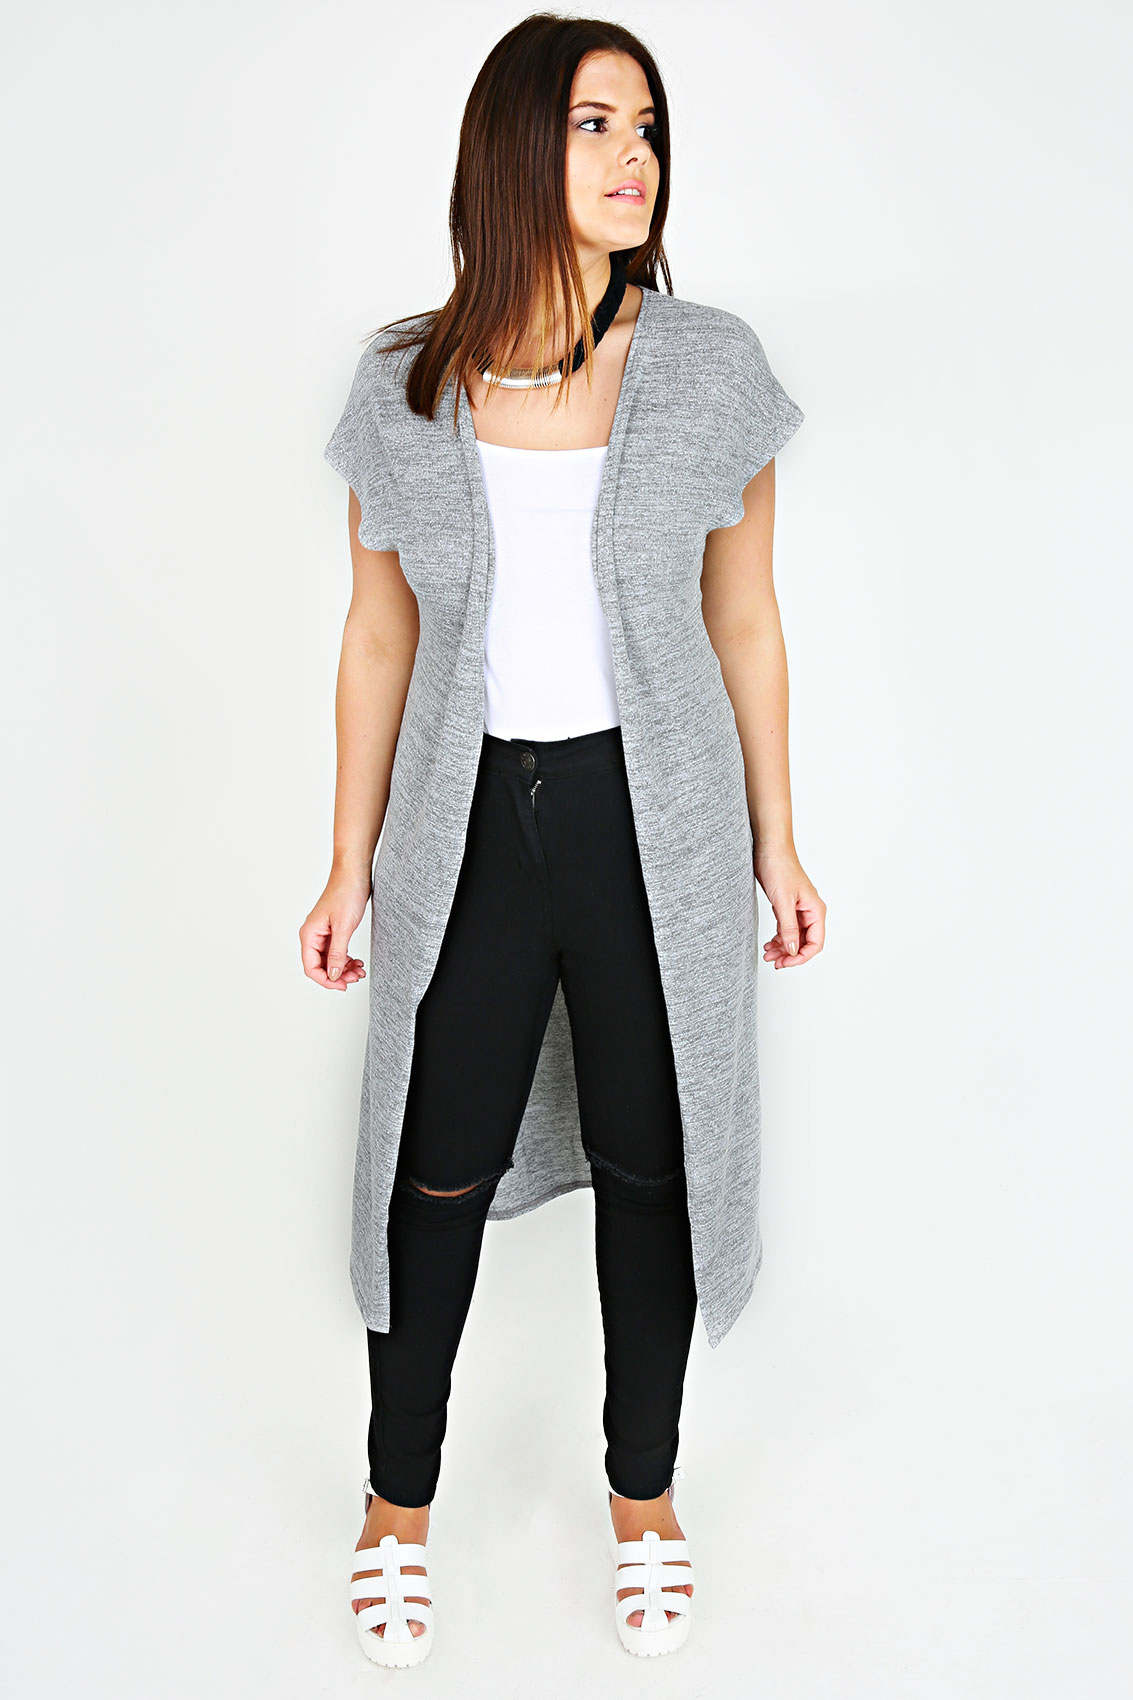 Grey Marl Longline Fine Knit Sleeveless Cardigan Plus Size 16 18 20 22 24 26 28 30 32